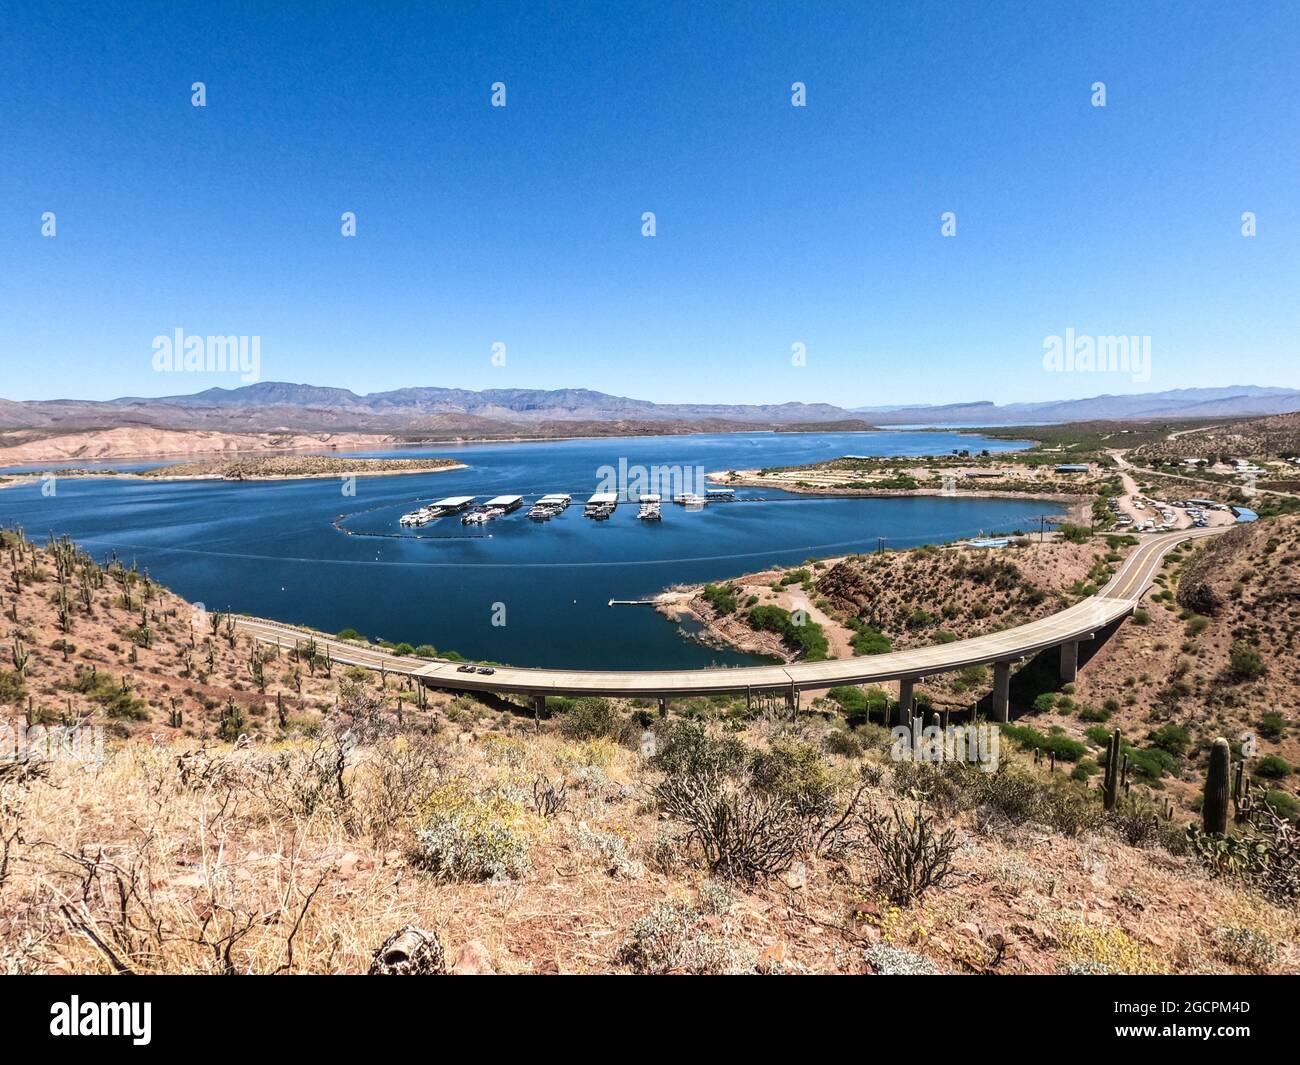 View of Roosevelt Lake Marina from the Arizona Trail, Roosevelt, Arizona, U.S.A Stock Photo